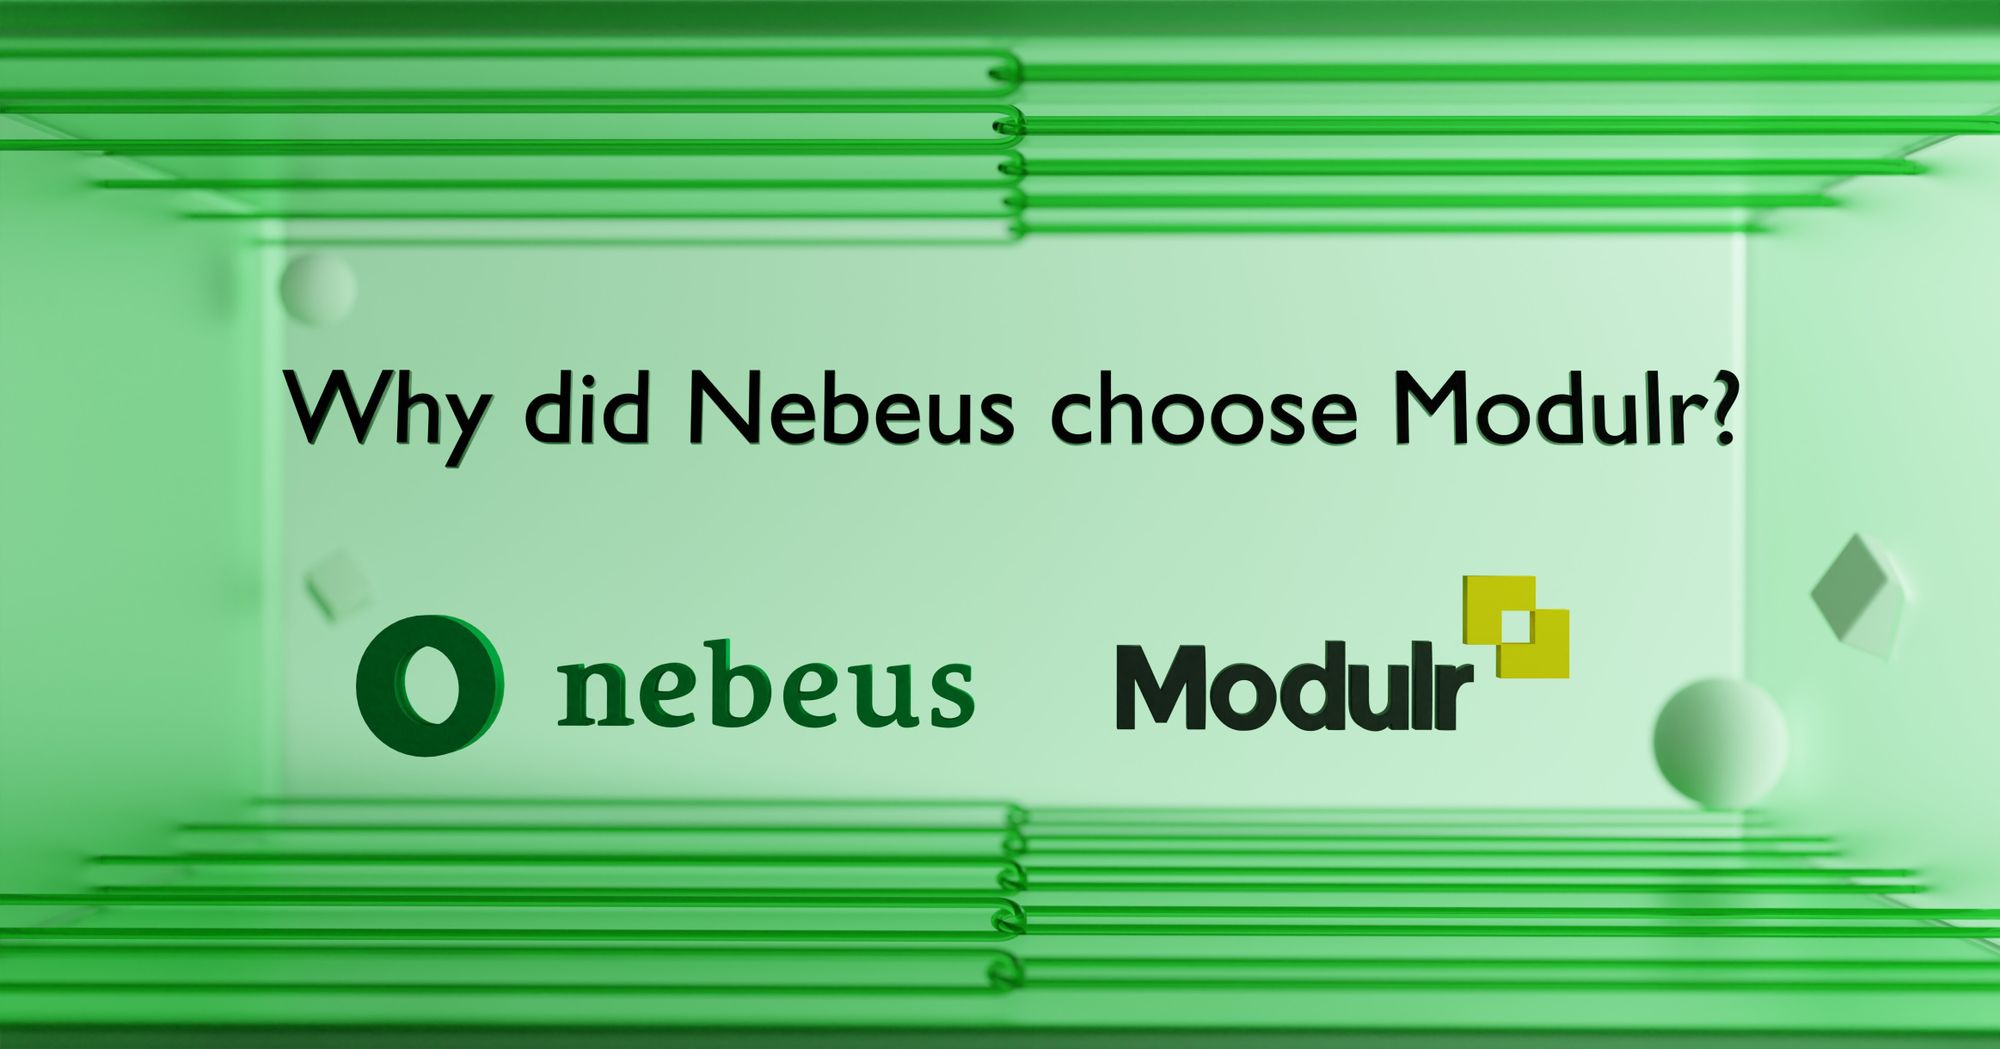 Why did Nebeus choose Modulr?